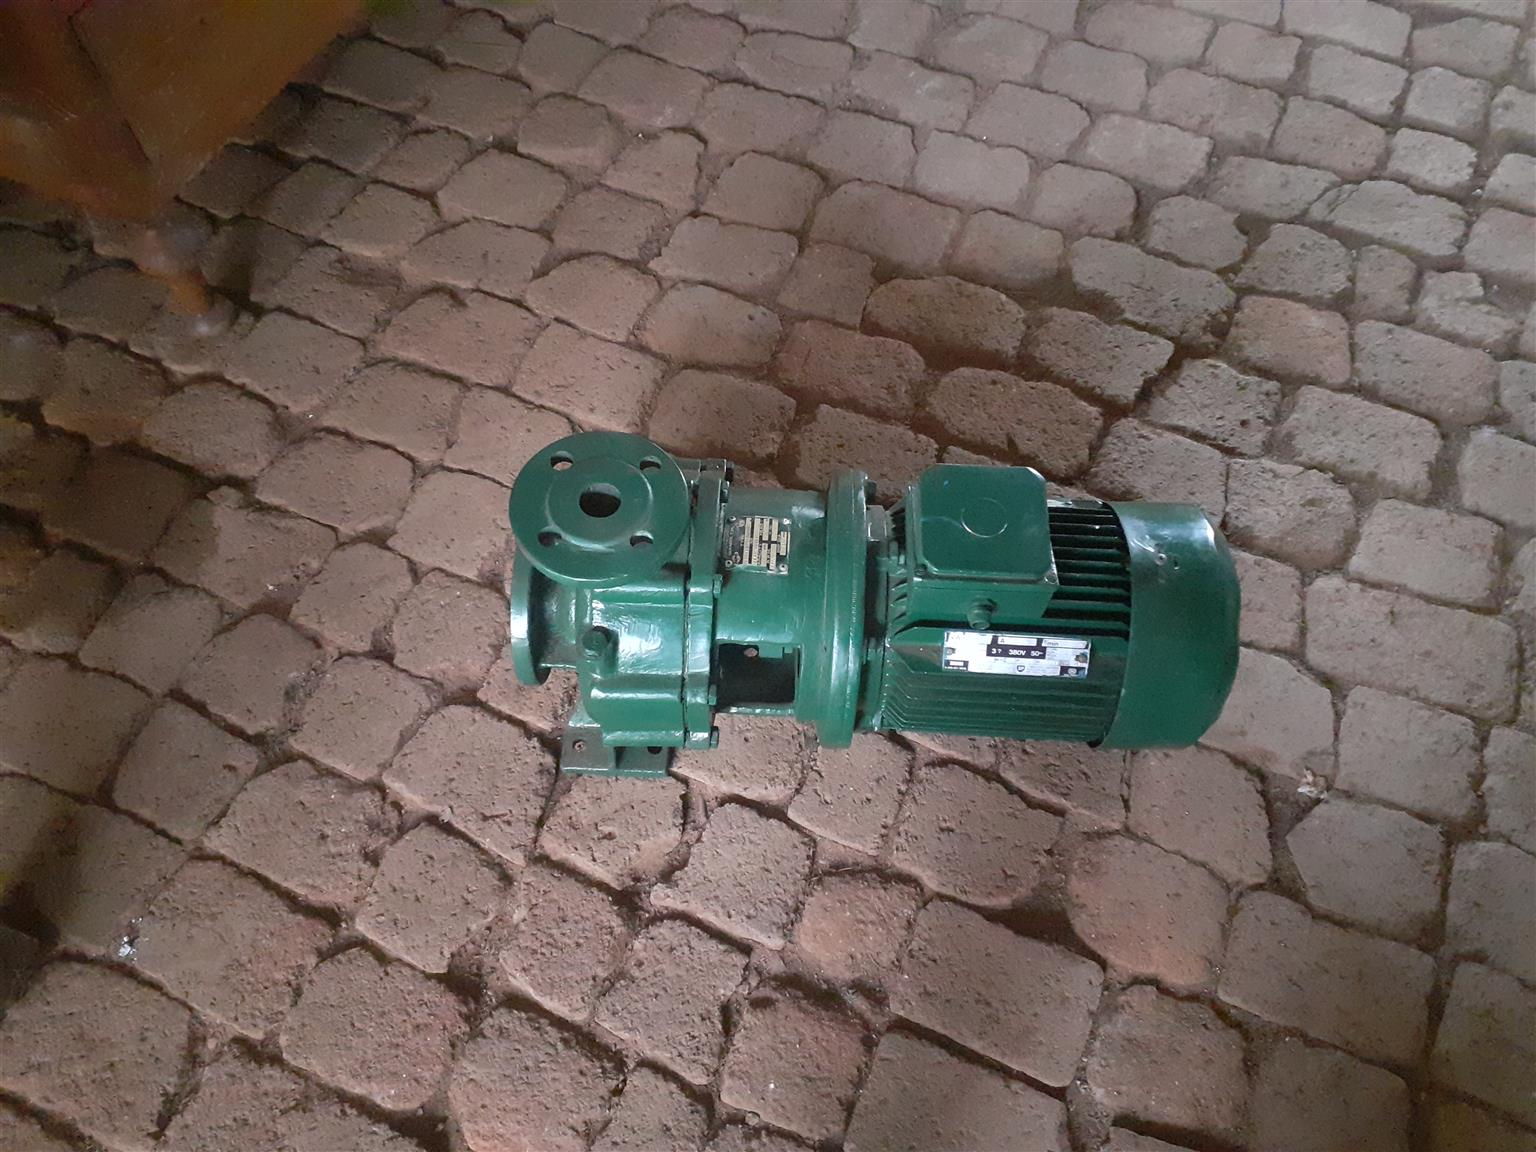 2 x Rapid Allweiler pumps with Motors